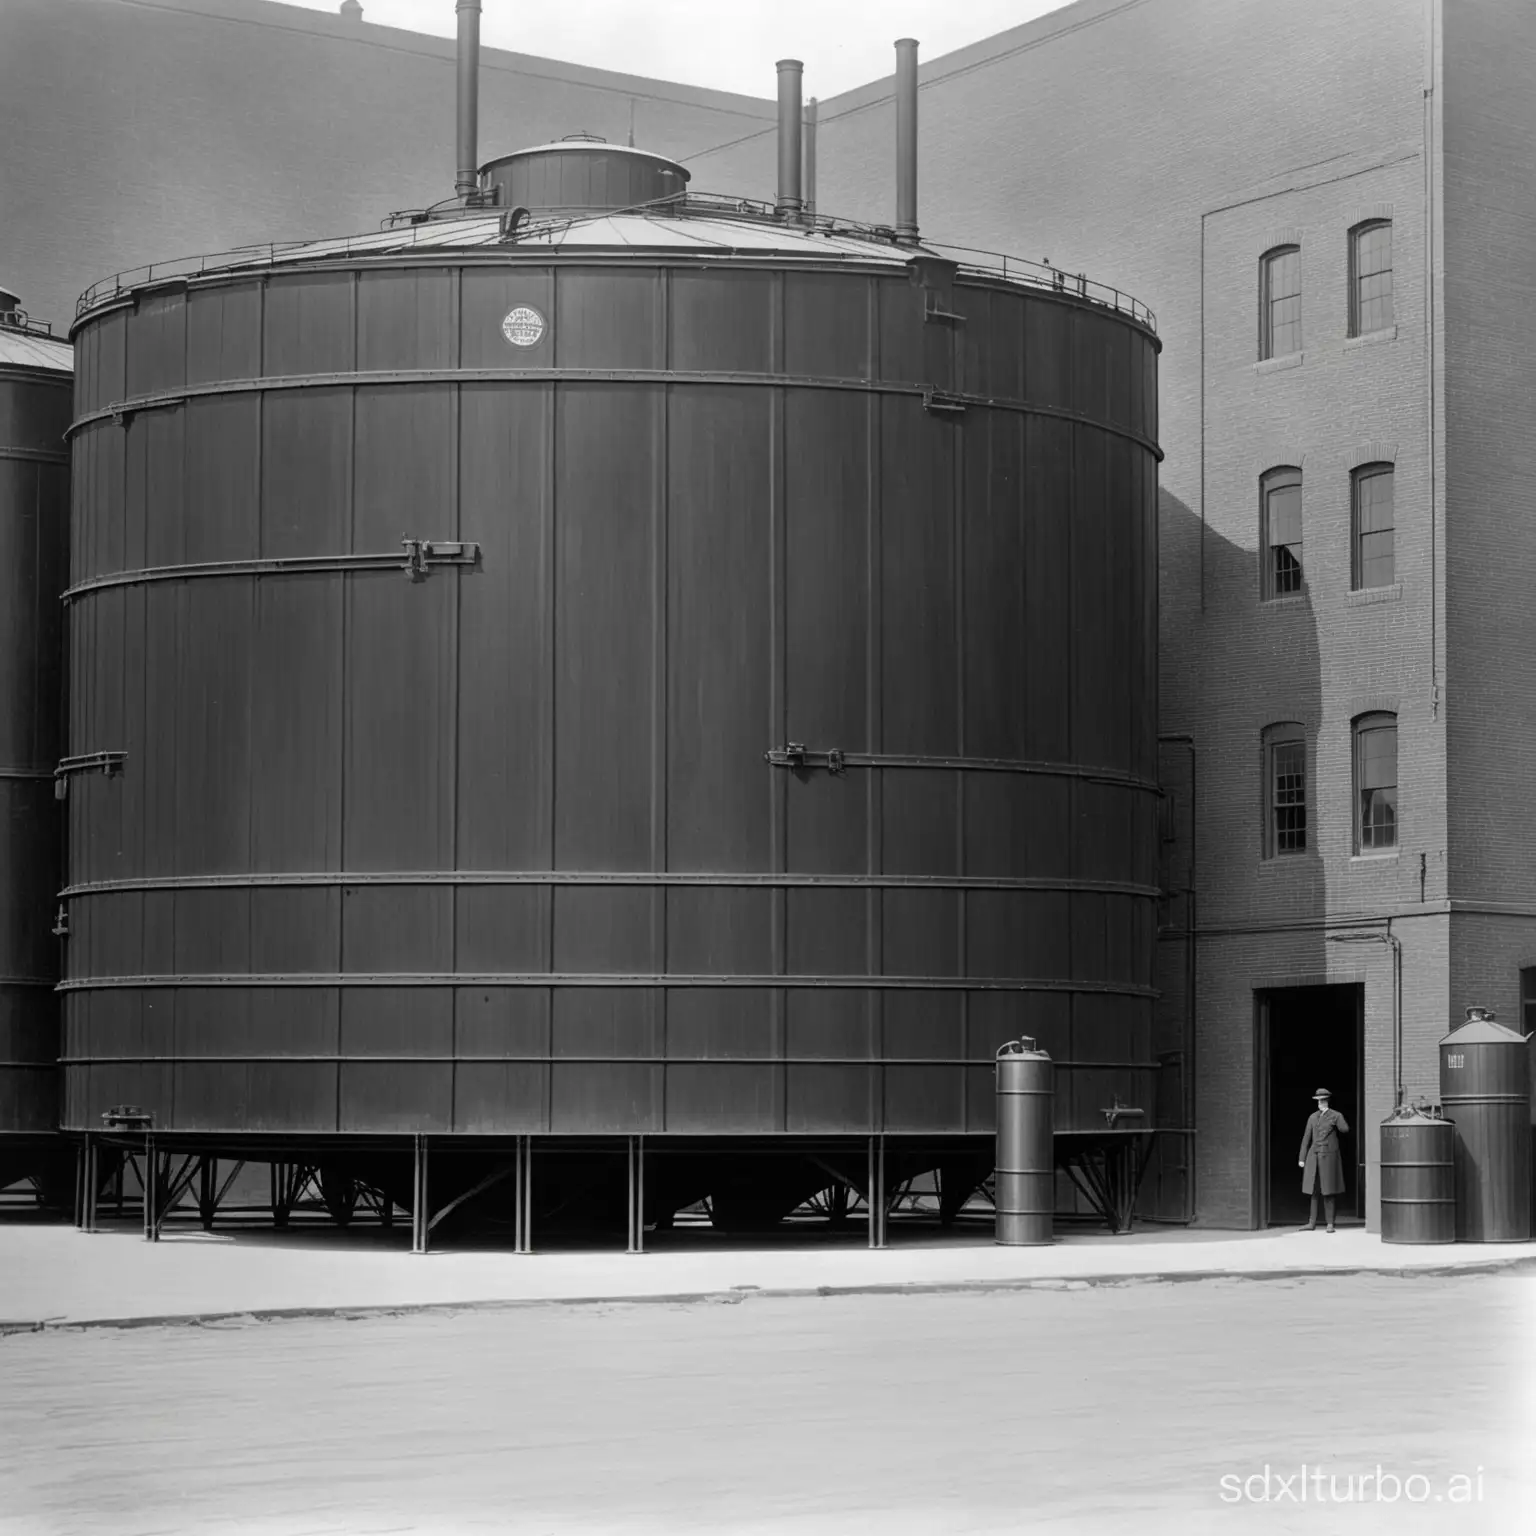 Historic-Molasses-Storage-Tank-at-Purity-Distilling-Company-1919